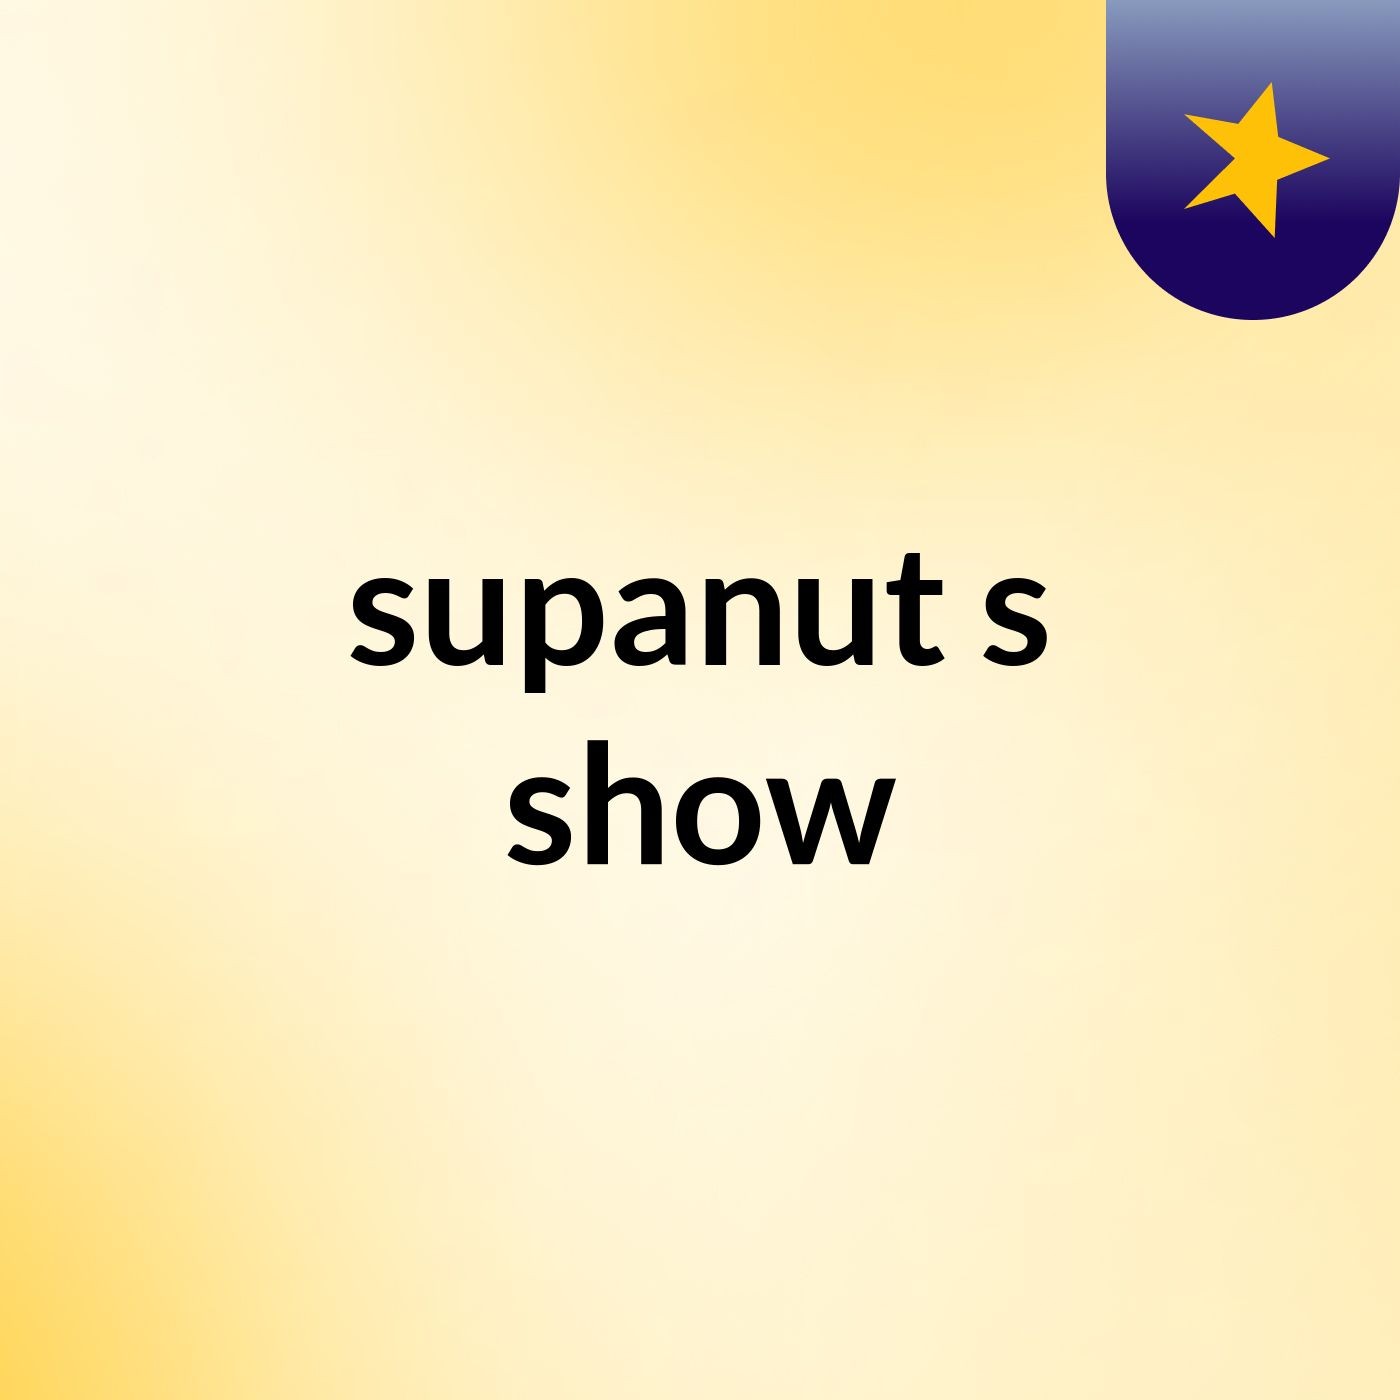 supanut's show